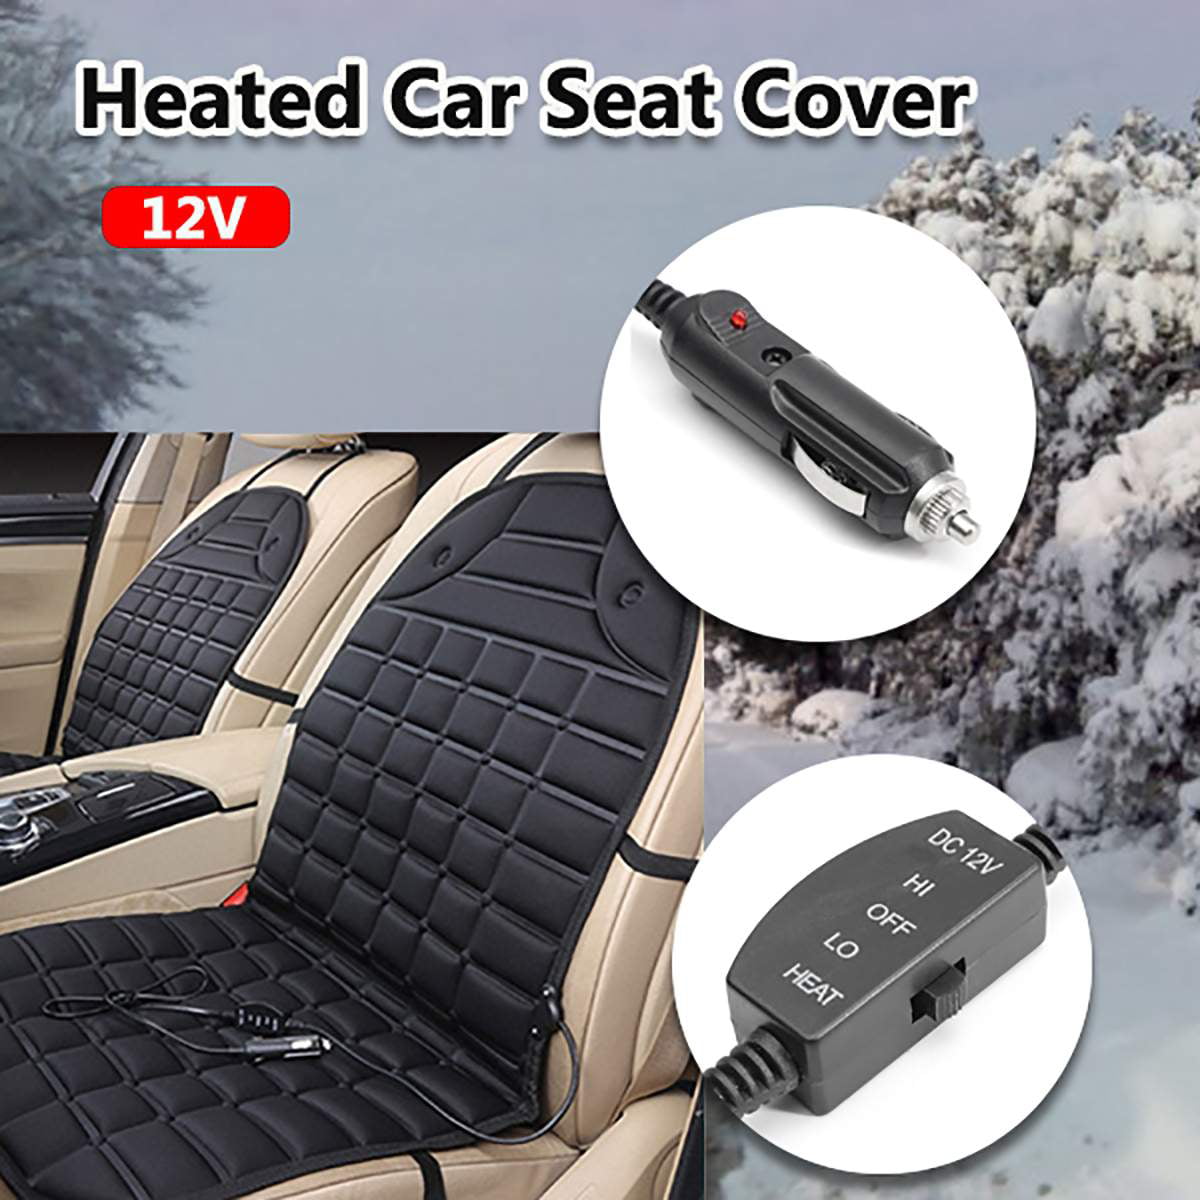 Car heating seat cushion 12V-24V universal Car Seat Hot Heater Heated Pad Cushion Winter Warmer Cover,Brown,1Pack 